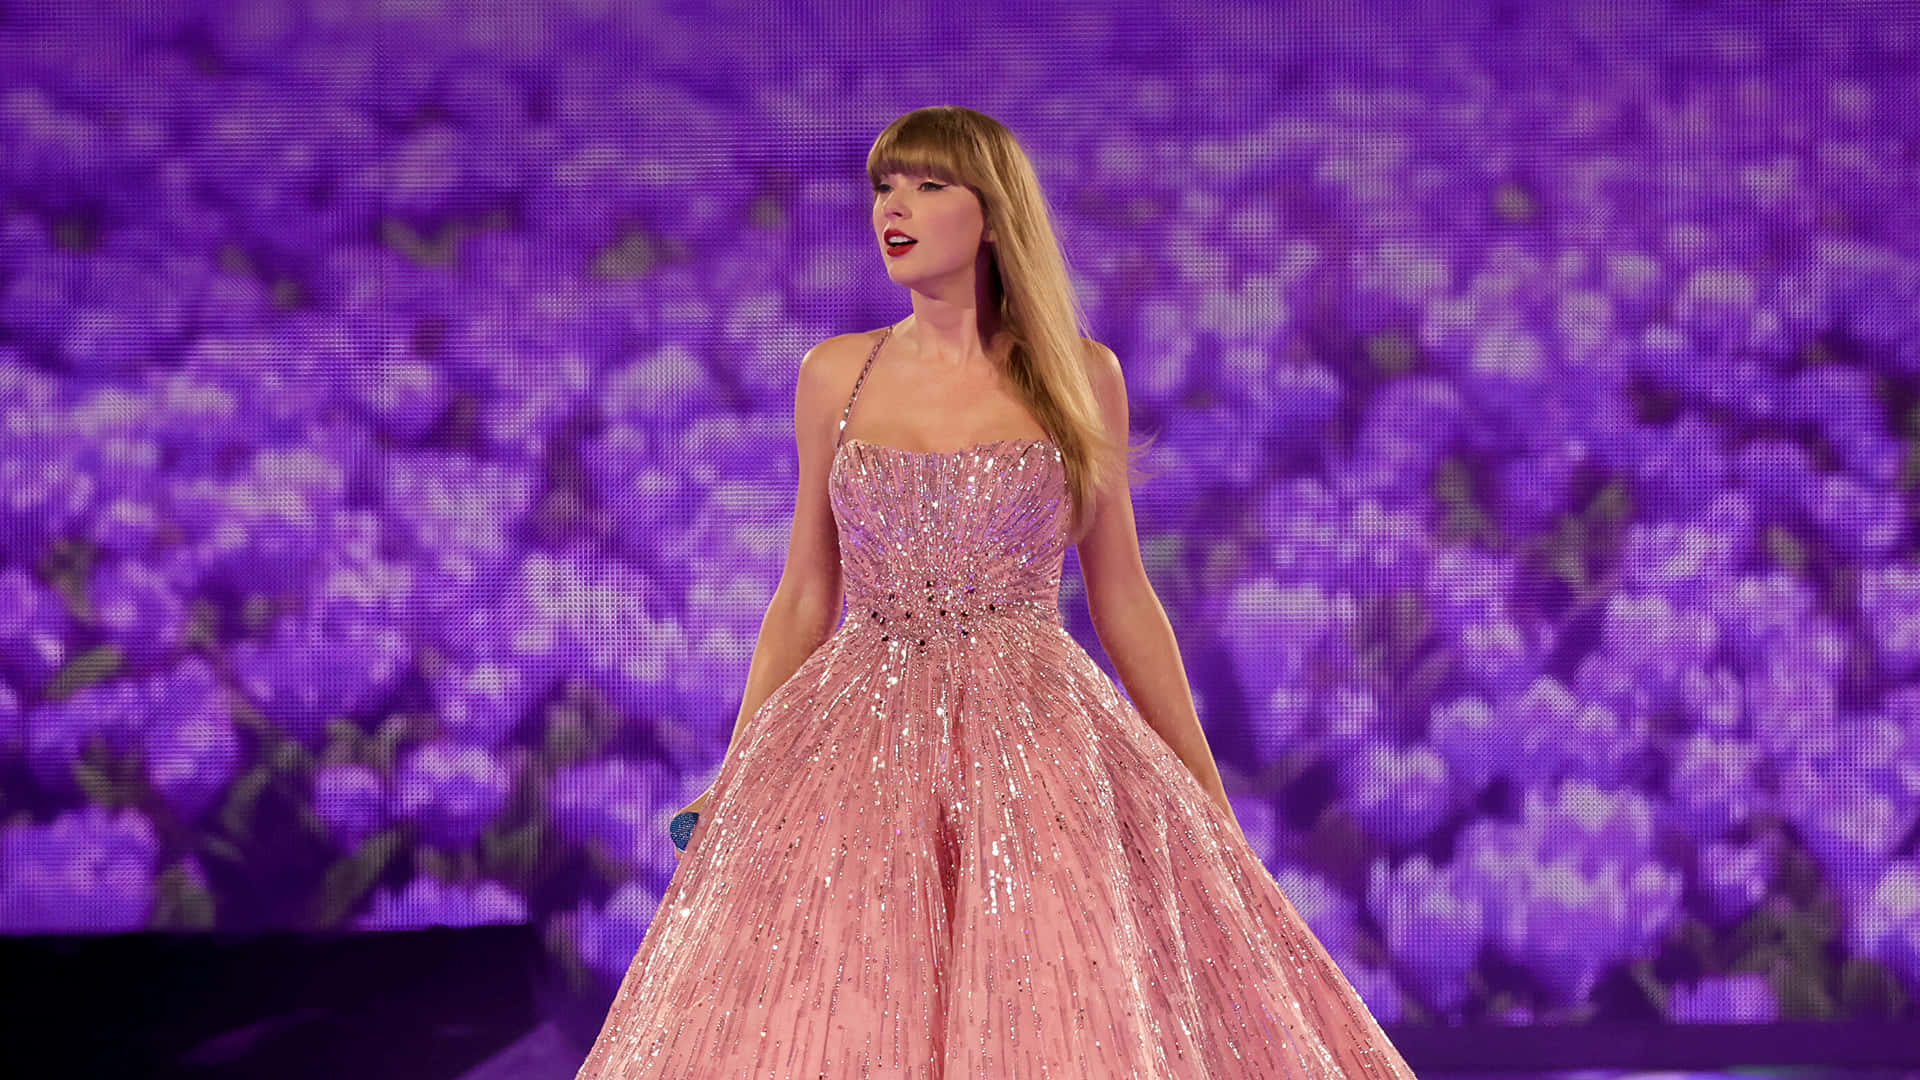 Elegant Performancein Pink Gown Wallpaper